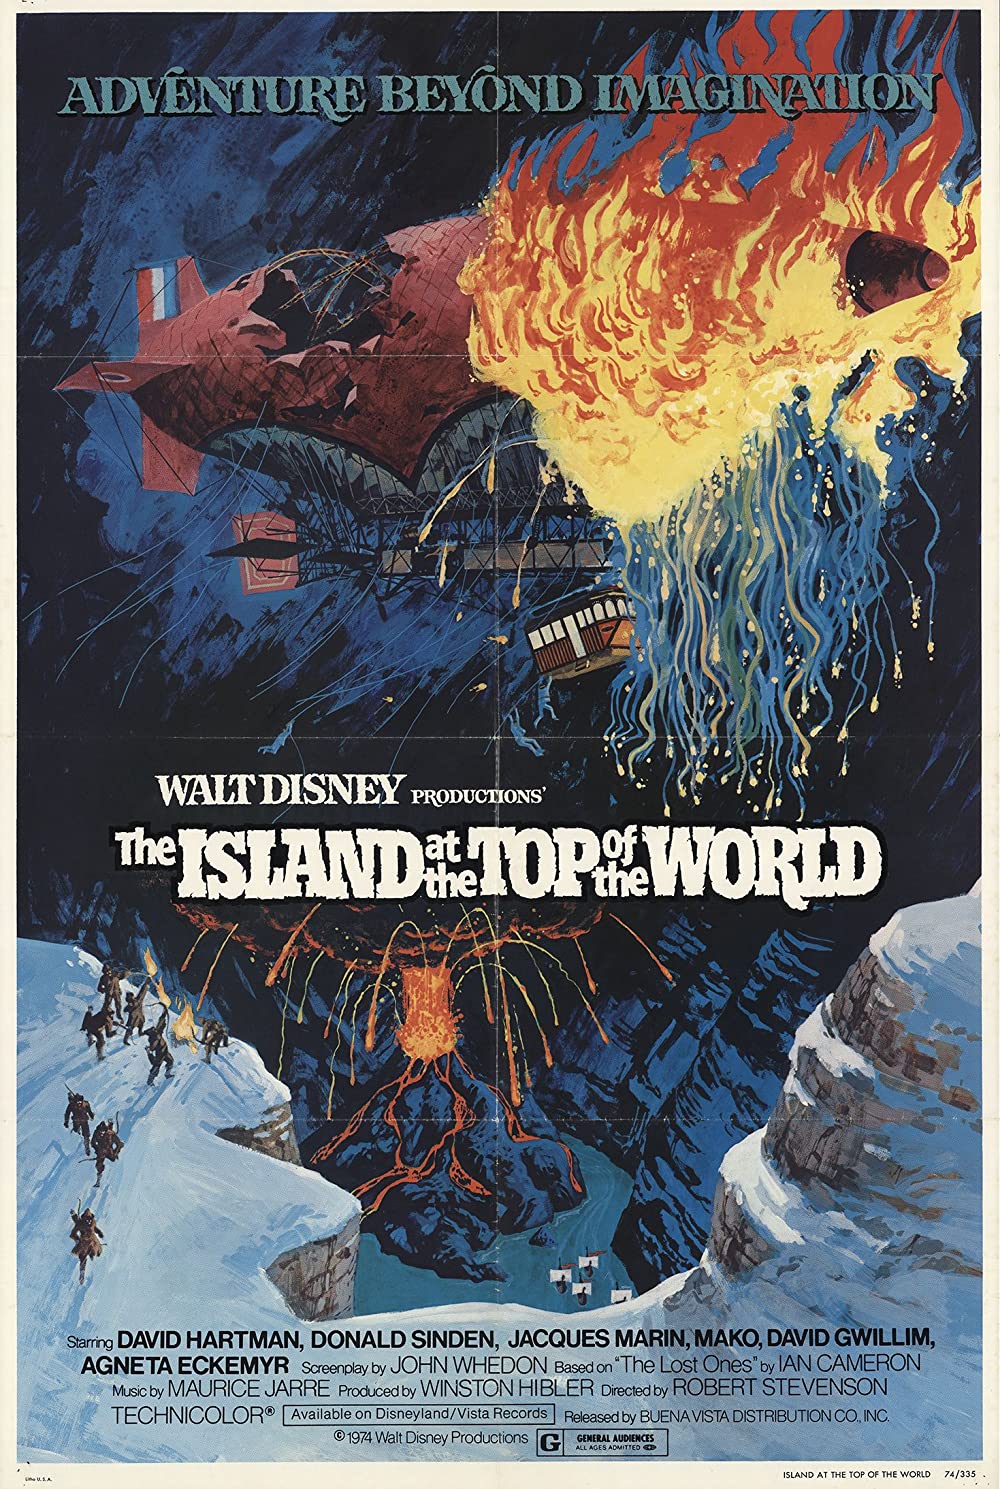 Filmbeschreibung zu The Island at the Top of the World